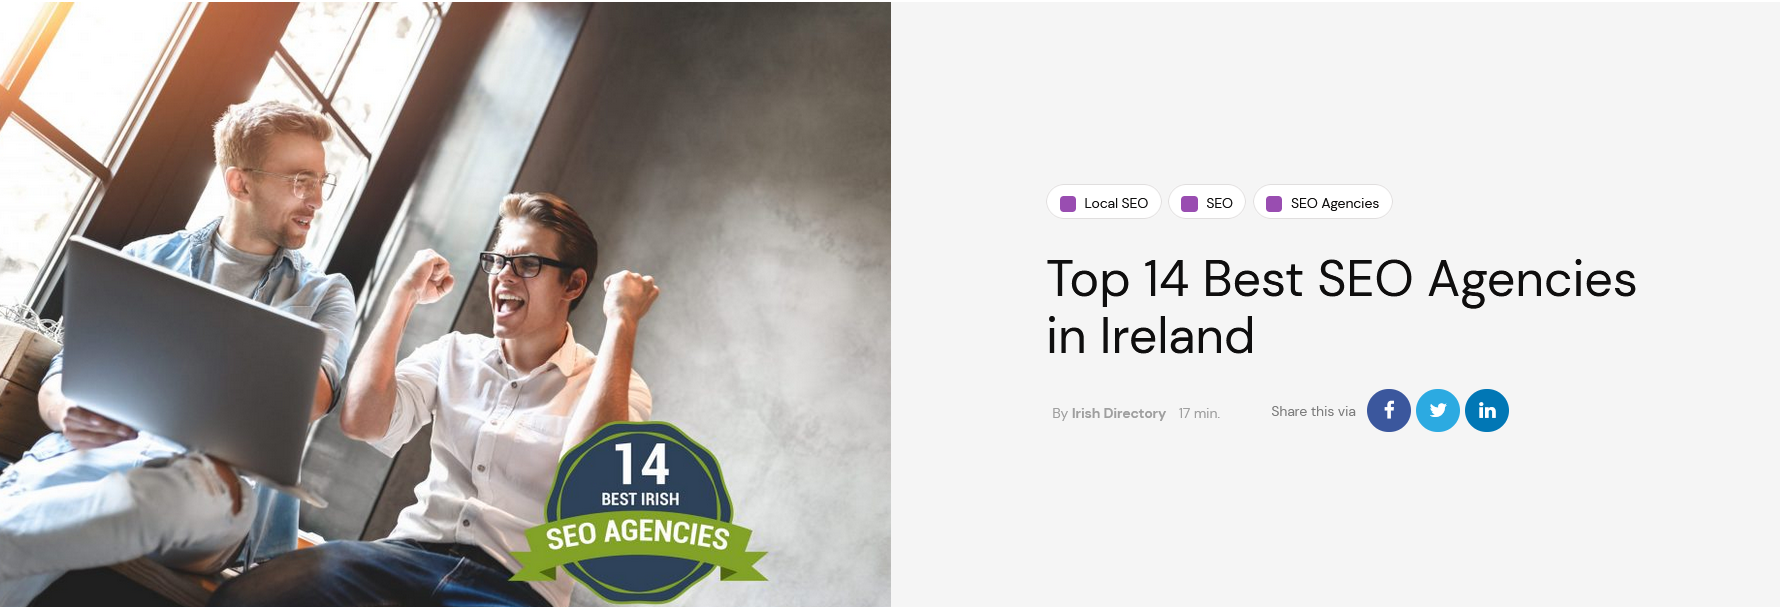 Top 14 Best SEO Agencies in Ireland - Digital Sales